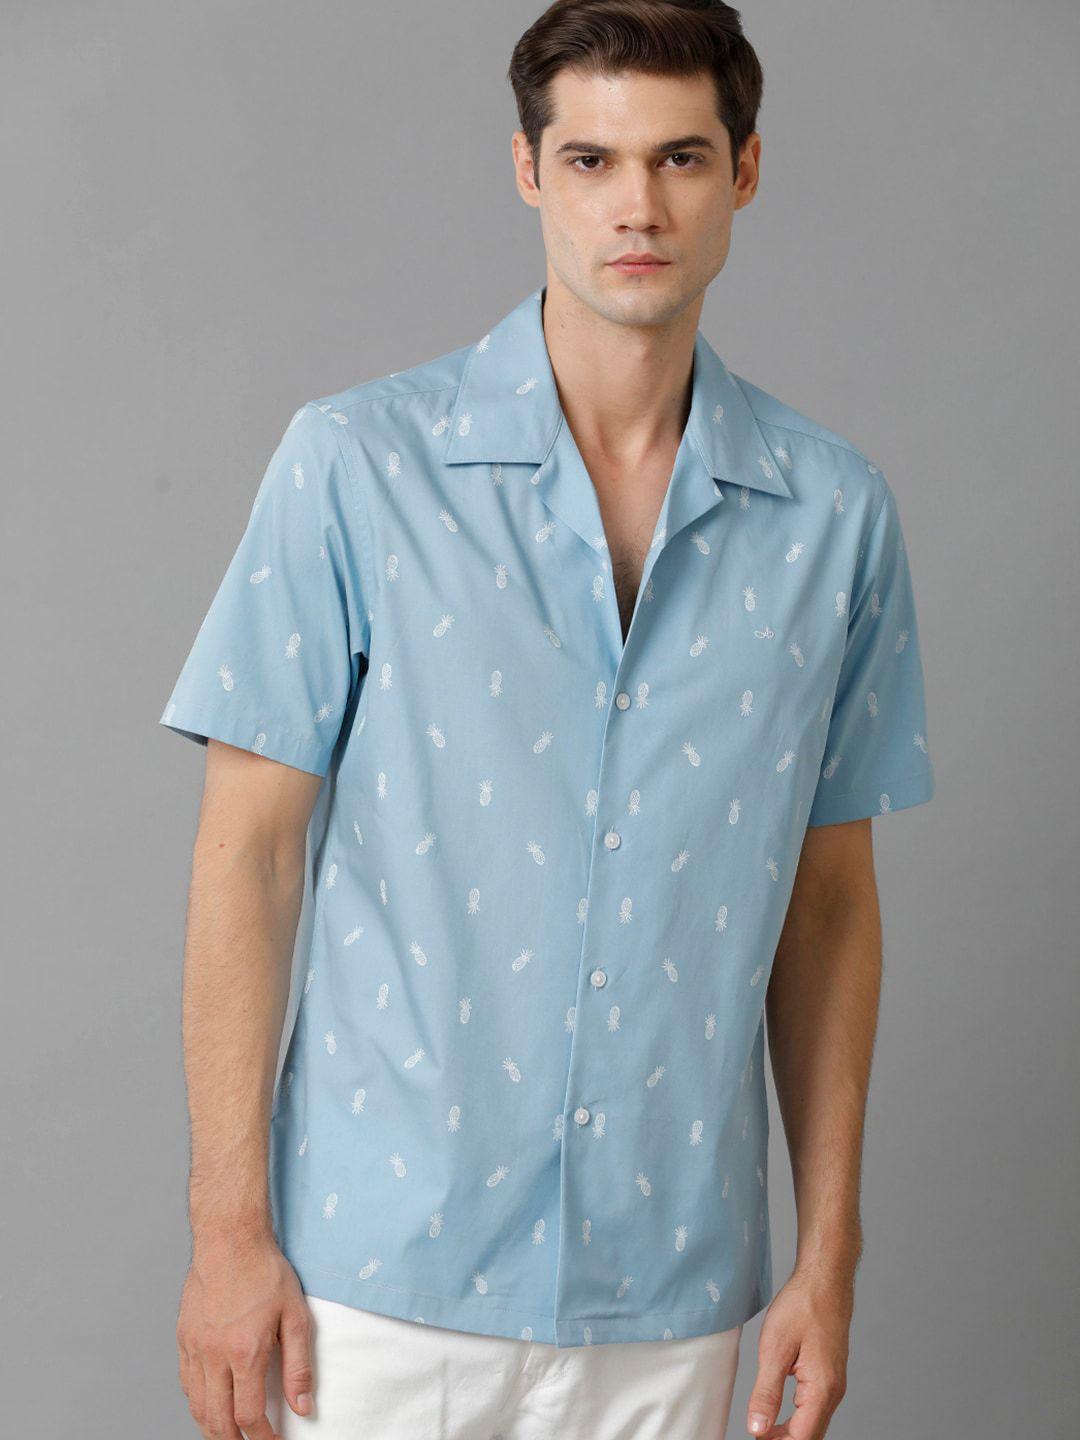 aldeno comfort conversational printed pure cotton casual shirt